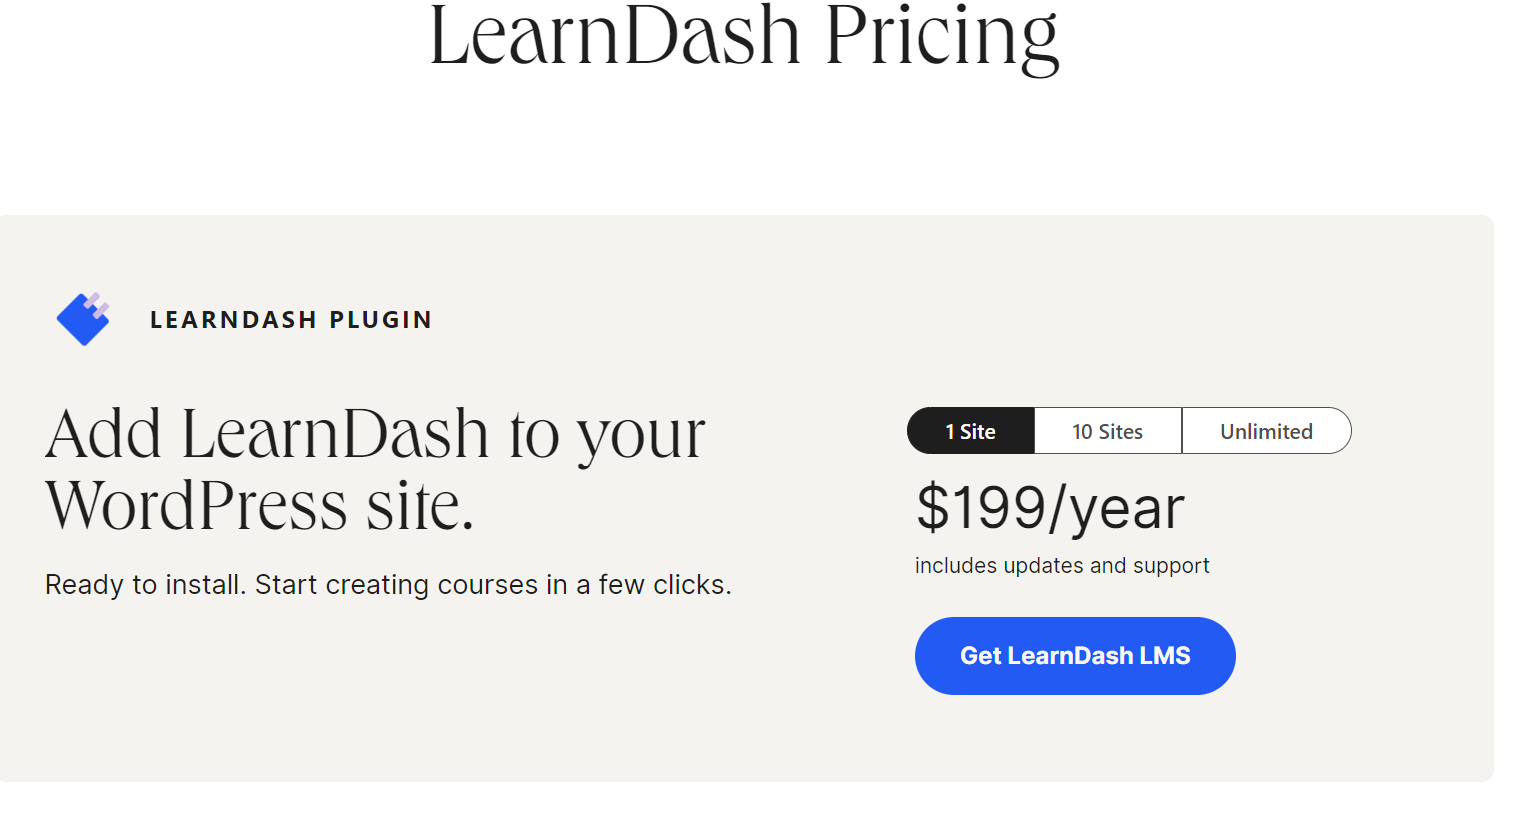 Learndash pricing